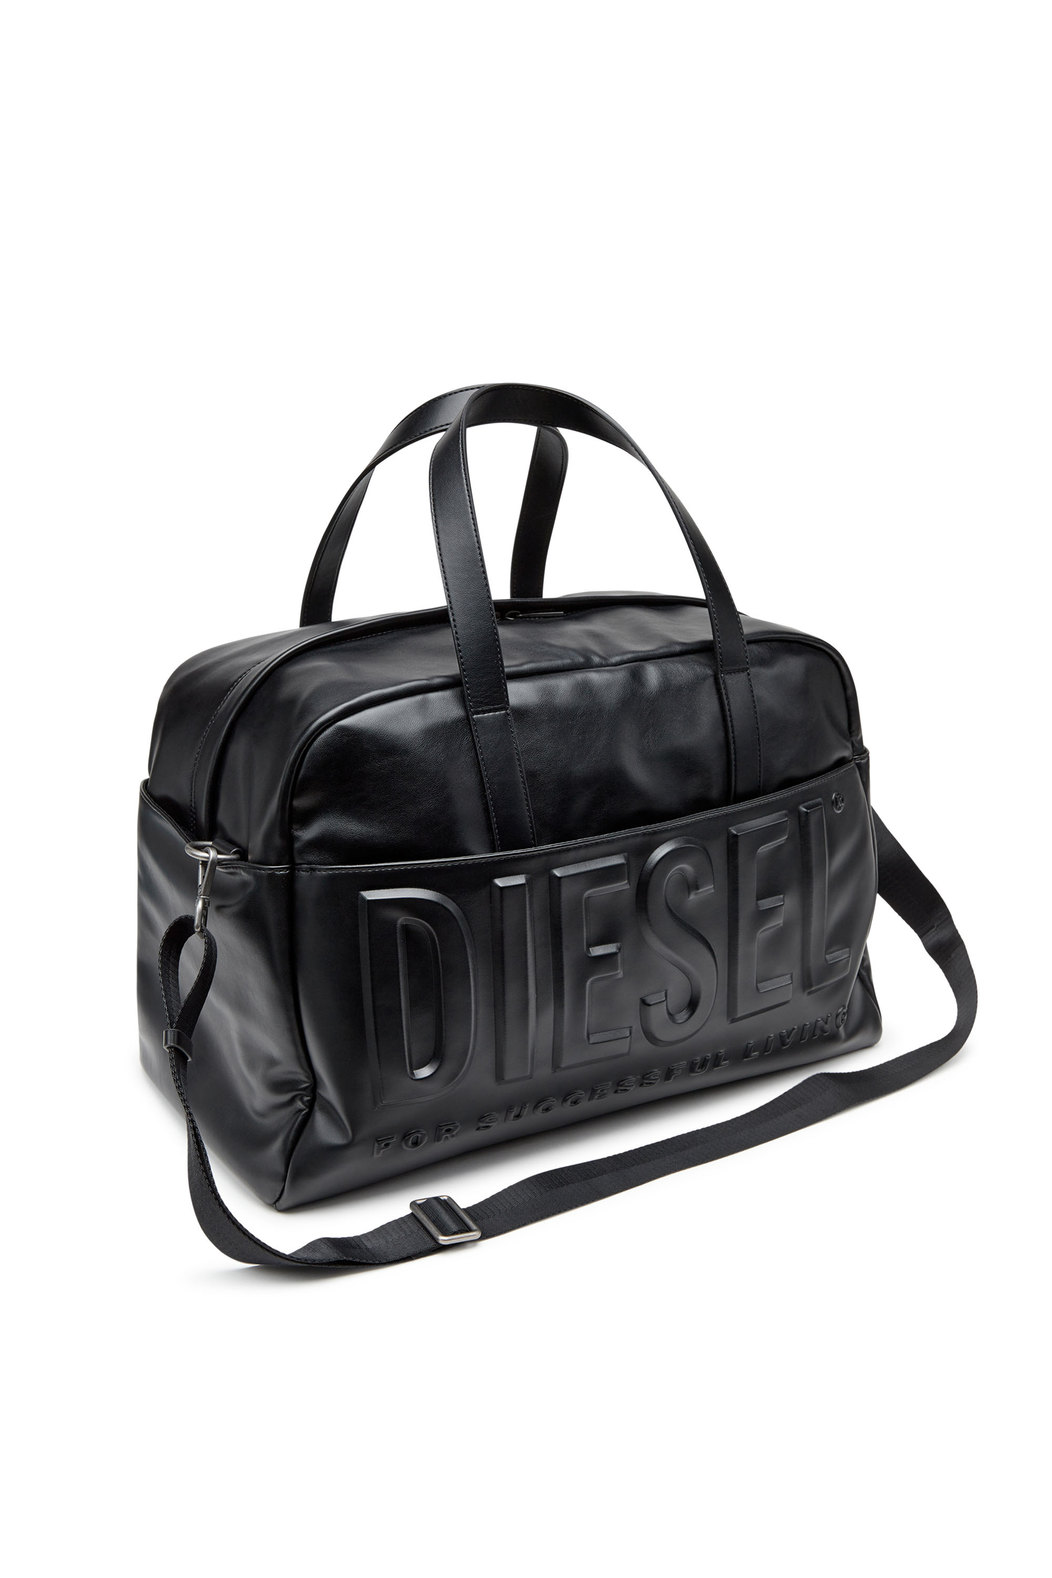 Dsl 3D Duffle L X Travel Bag - Duffle bag with extreme 3D logo